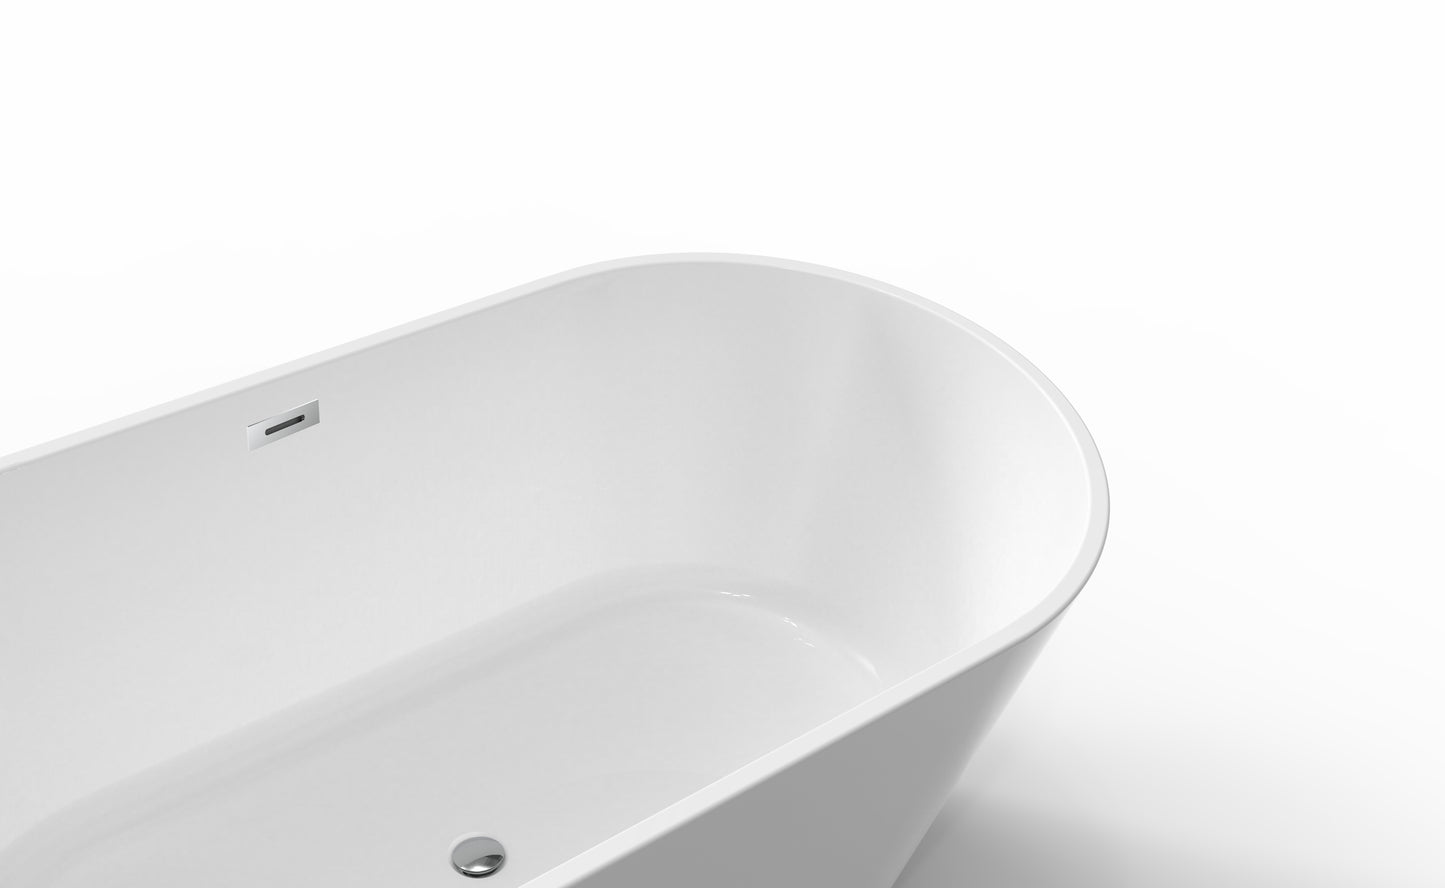 BAUHAUS Halo Freestanding Bath Tub - White - 1700 x 790 x 590mm